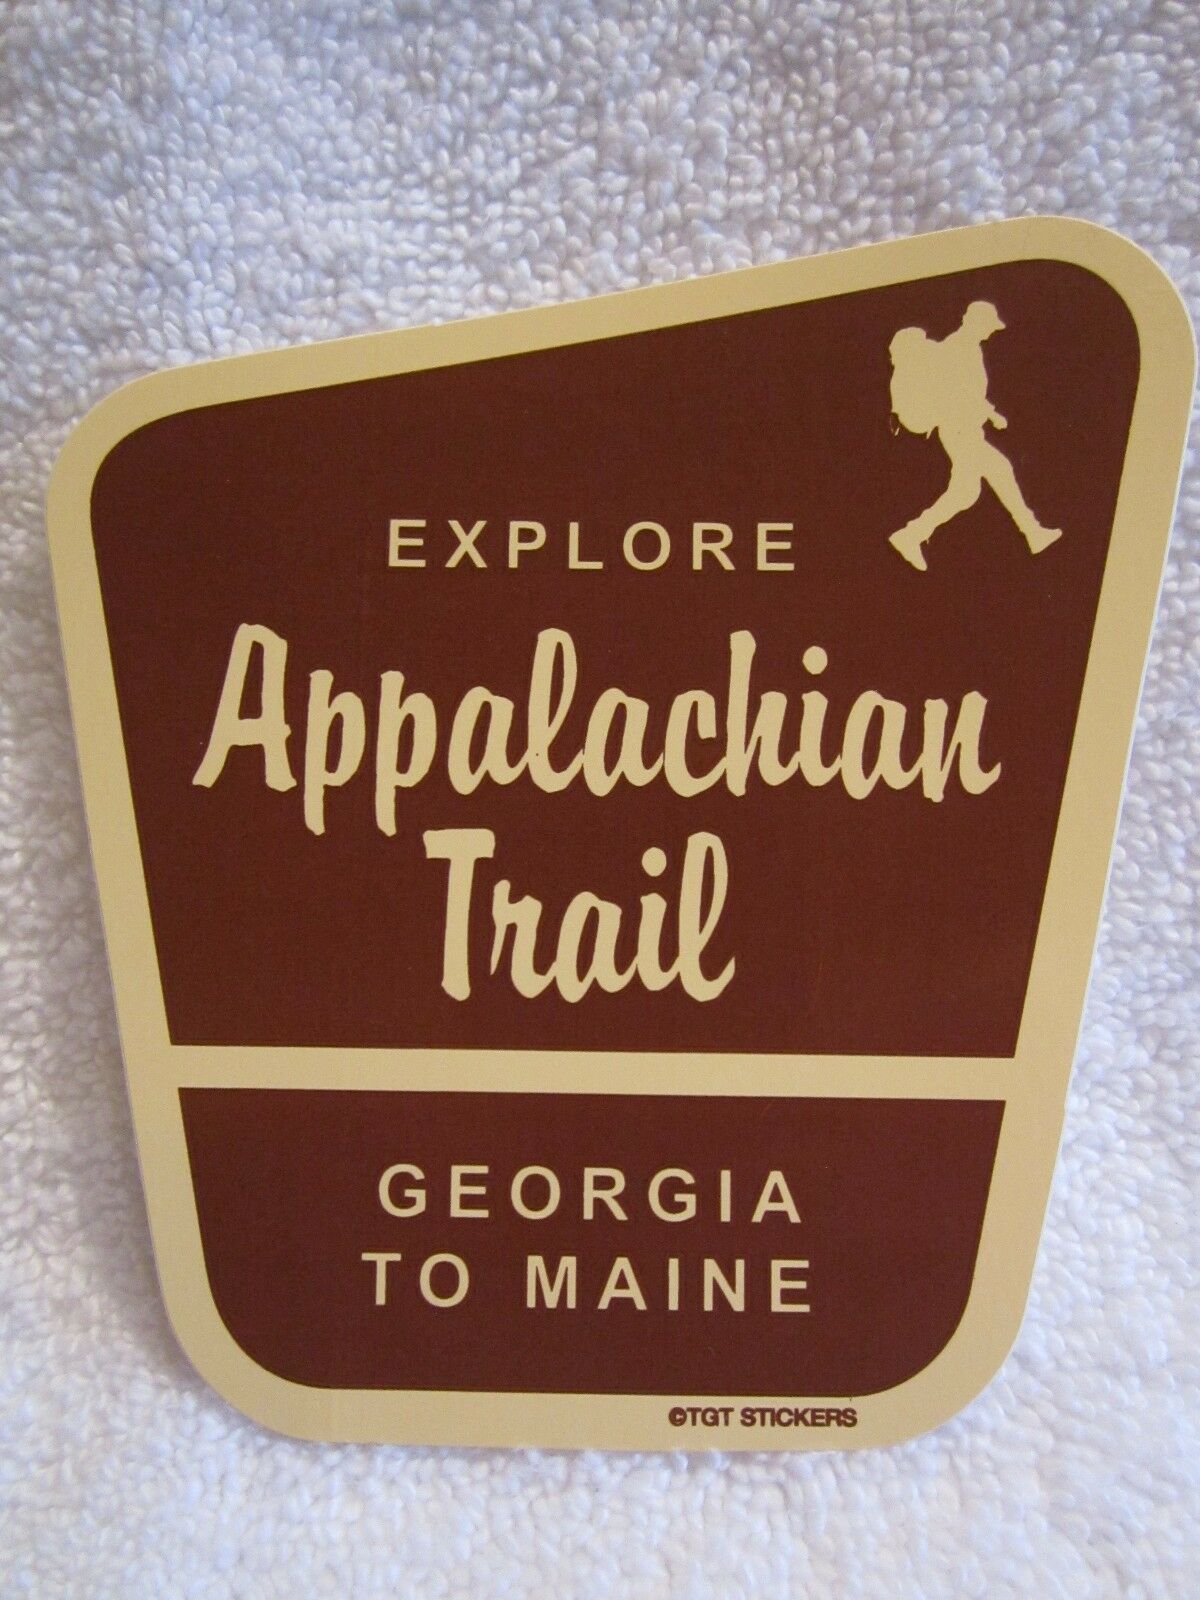 Explore "appalachian Trail" - Georgia To Maine - Souvenir Travel Sticker / Decal